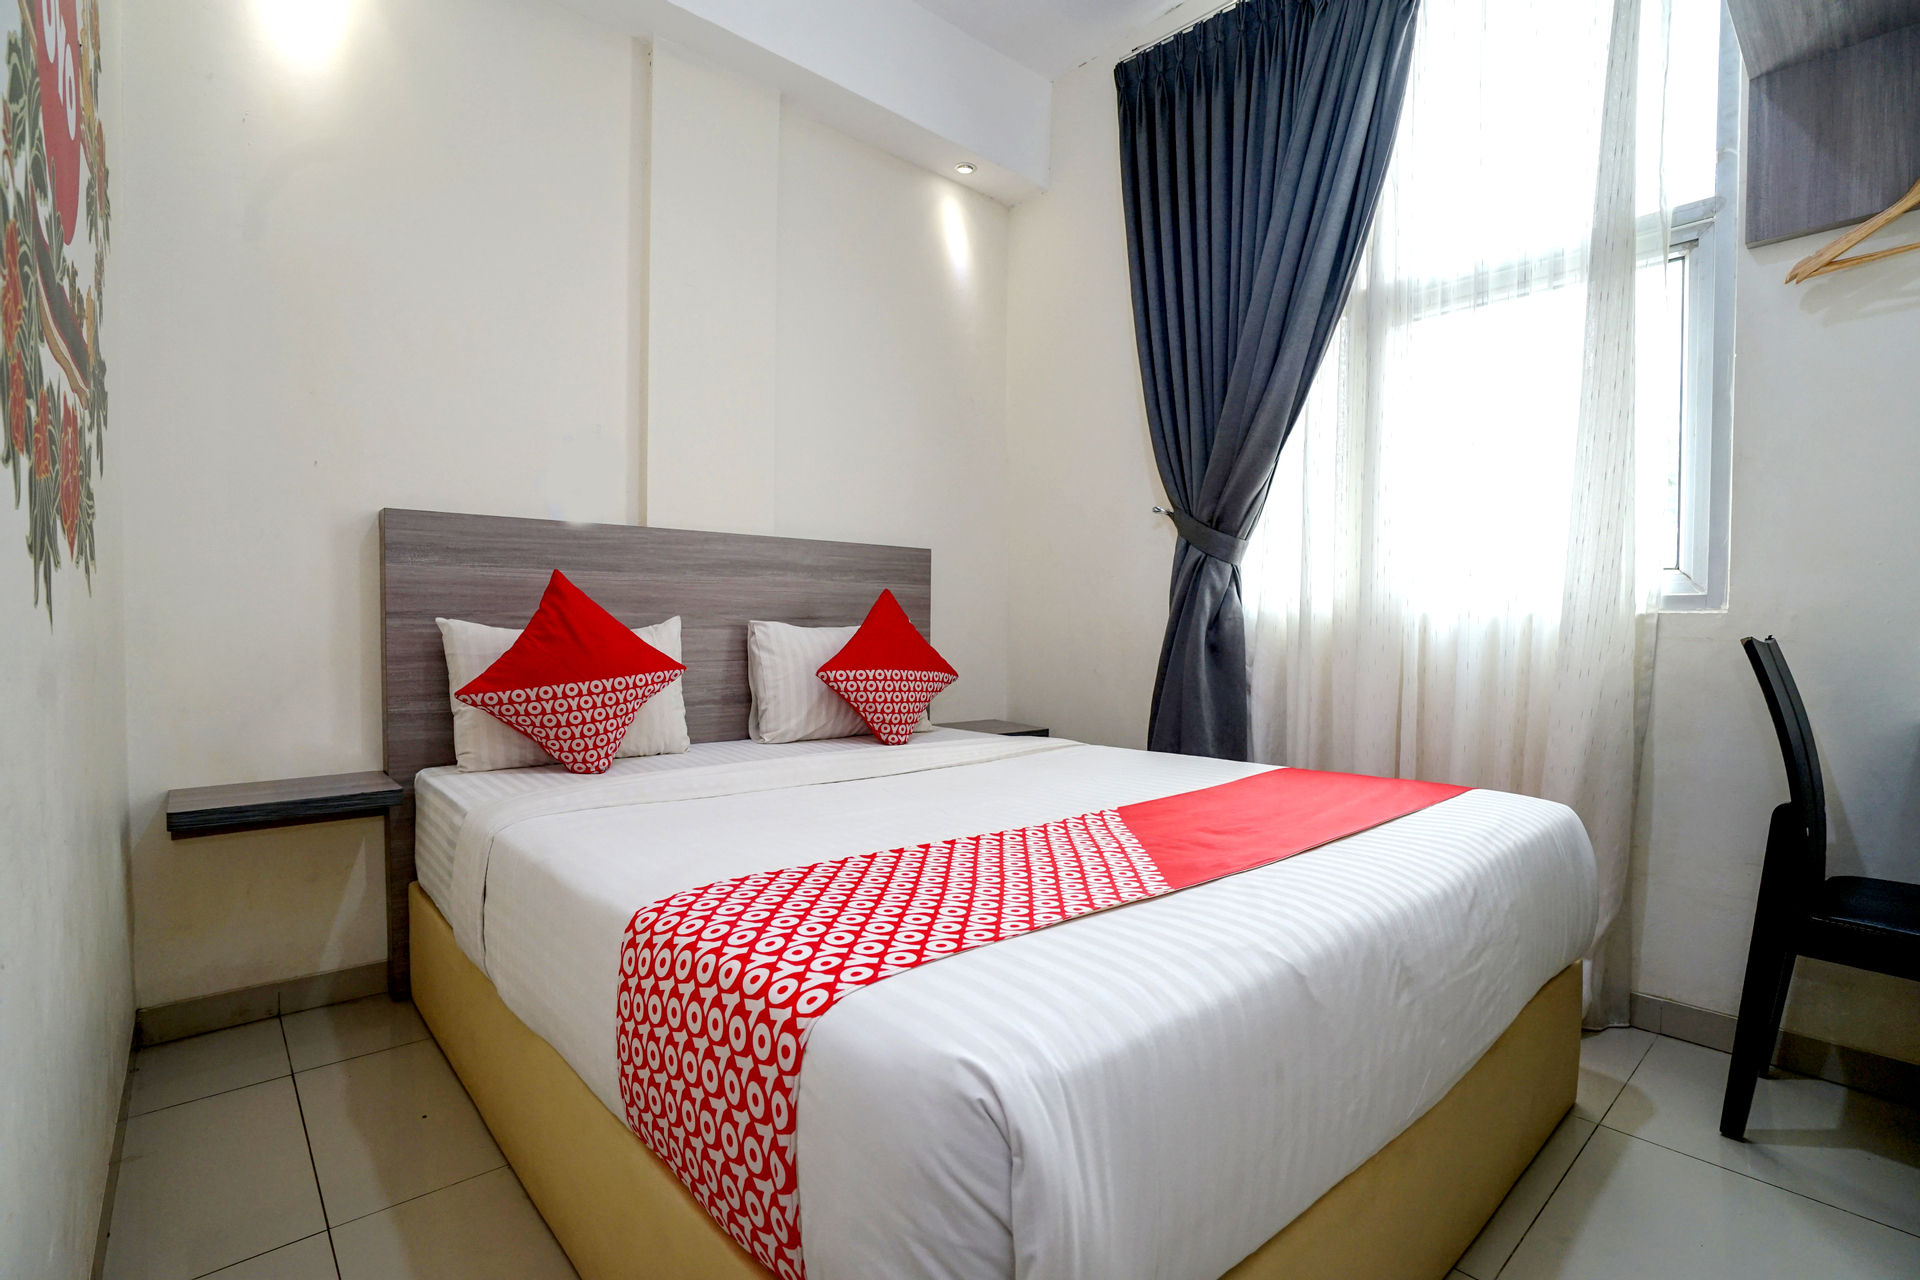 Bedroom 1, OYO 251 The Maximus Inn Hotel (tutup sementara), Palembang